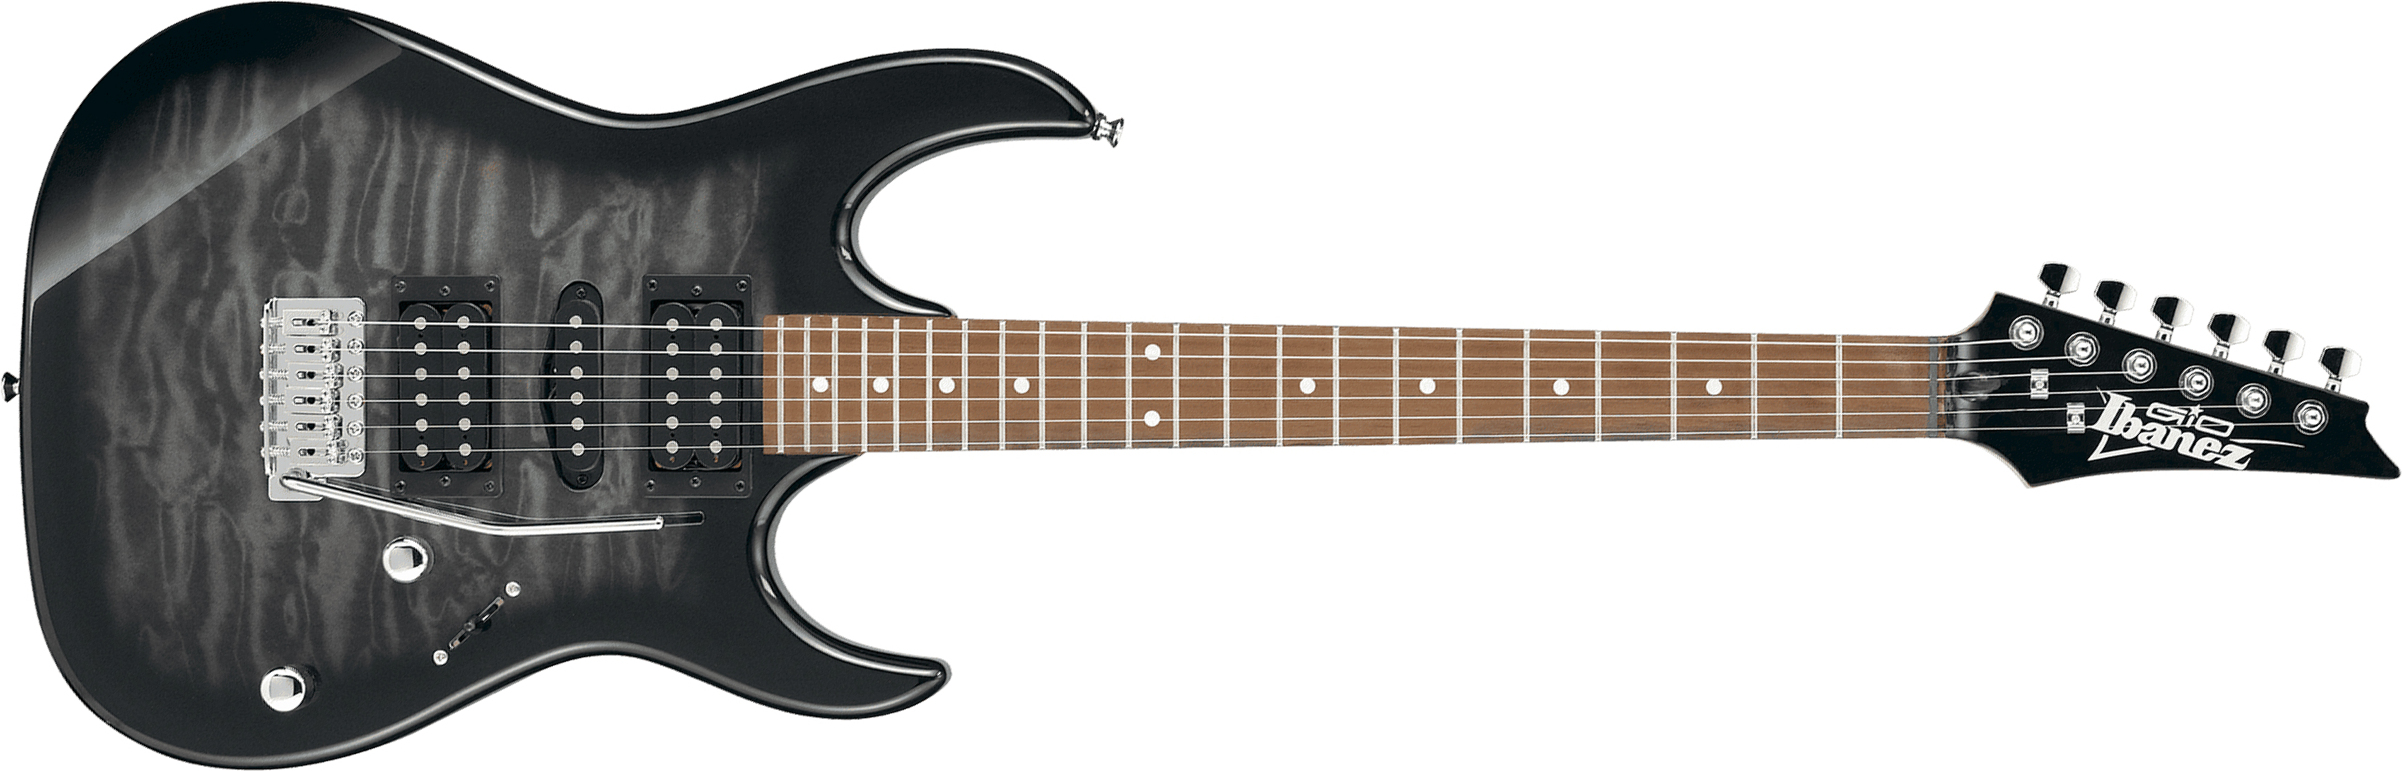 Ibanez Grx70qa Tks Gio Hsh Trem Nzp - Transparent Black Sunburst - Str shape electric guitar - Main picture